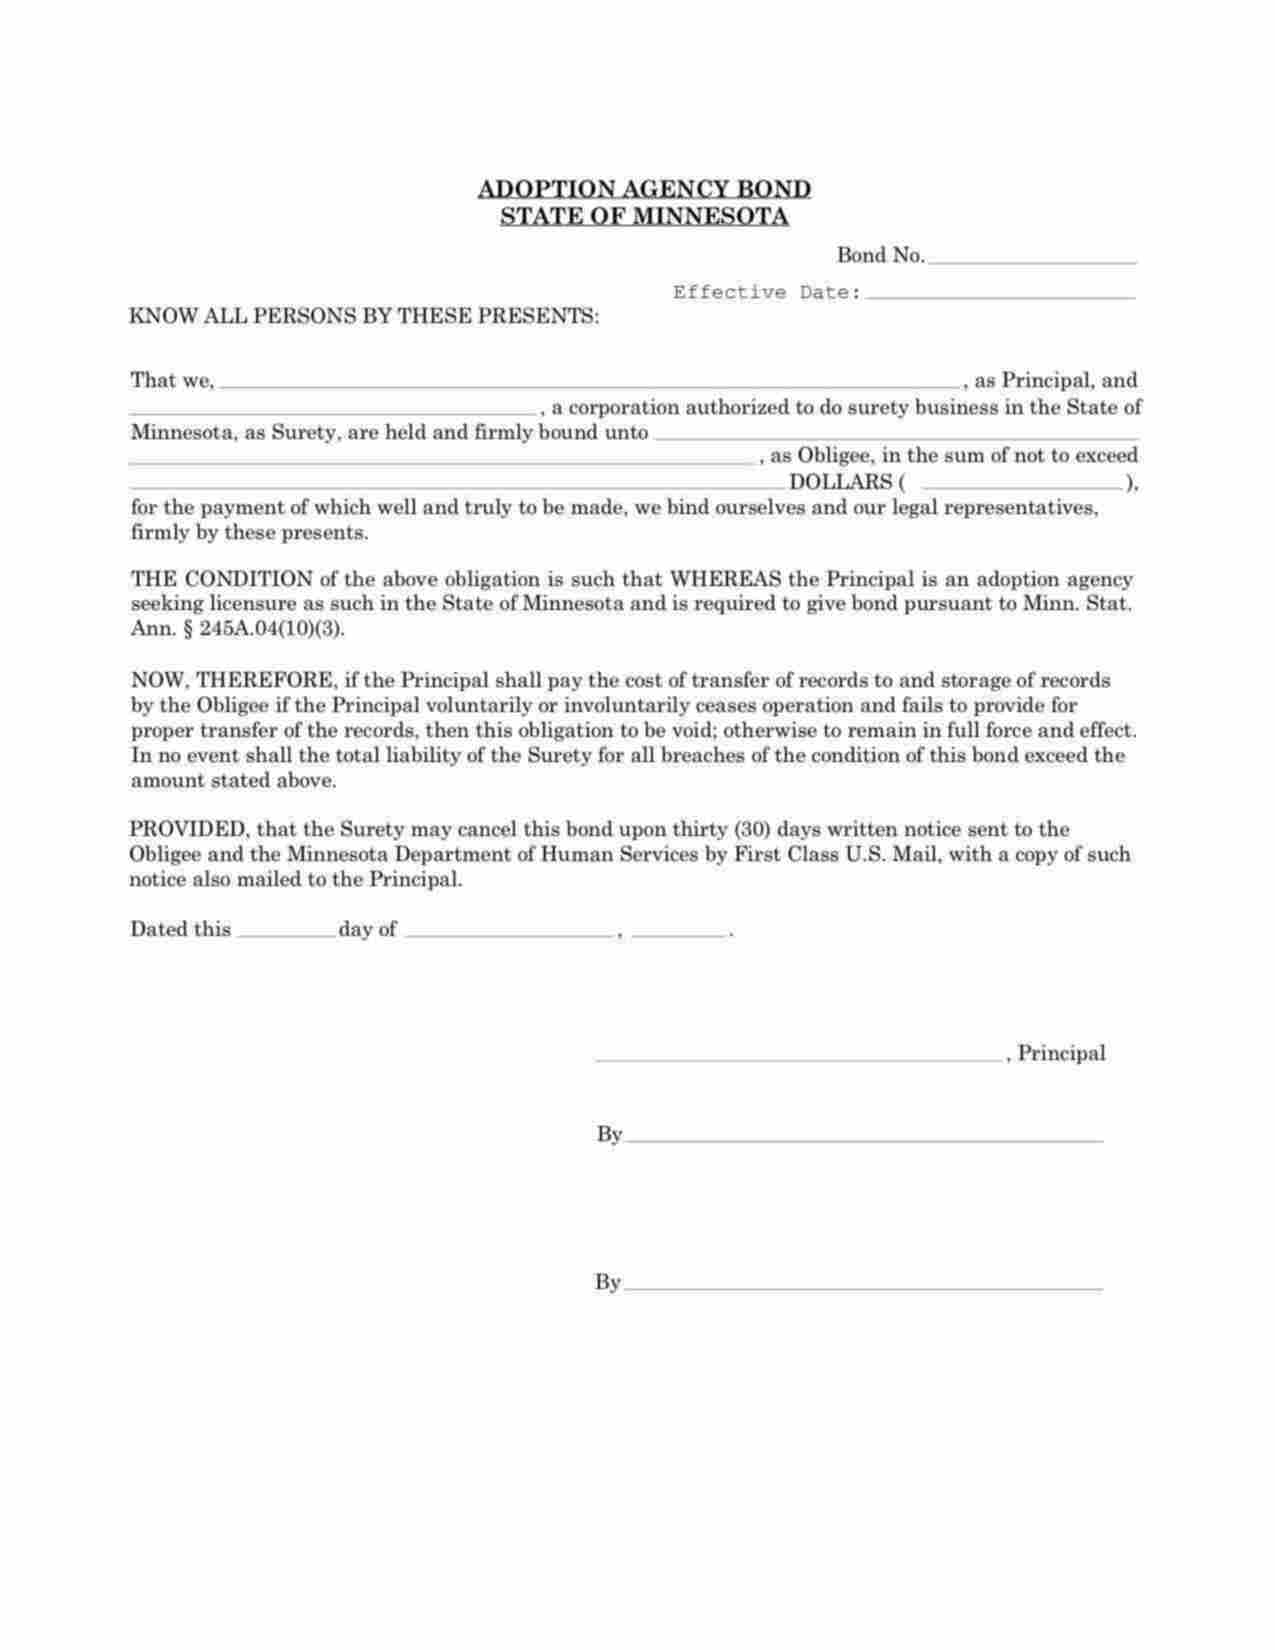 Minnesota Adoption Agency Bond Form